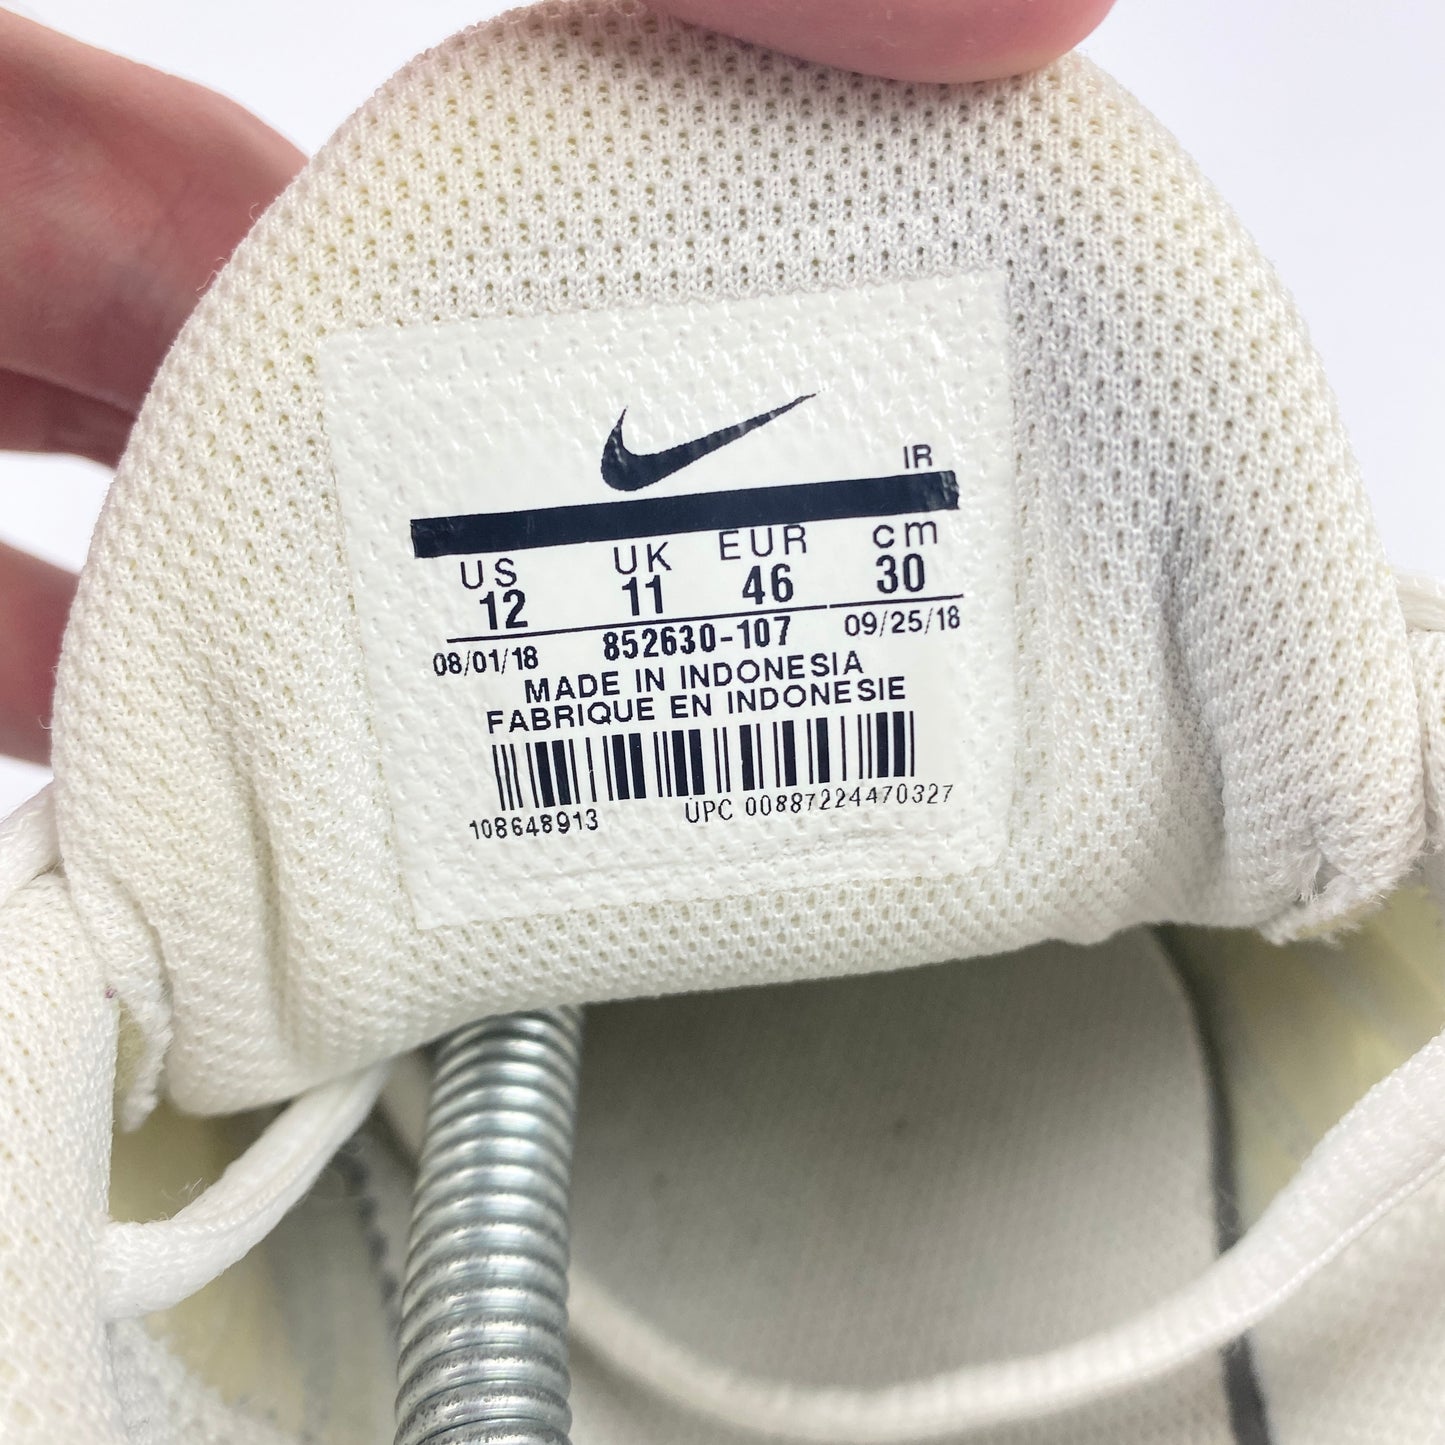 Nike Air Max Plus Tn 'White Grey' (2018)